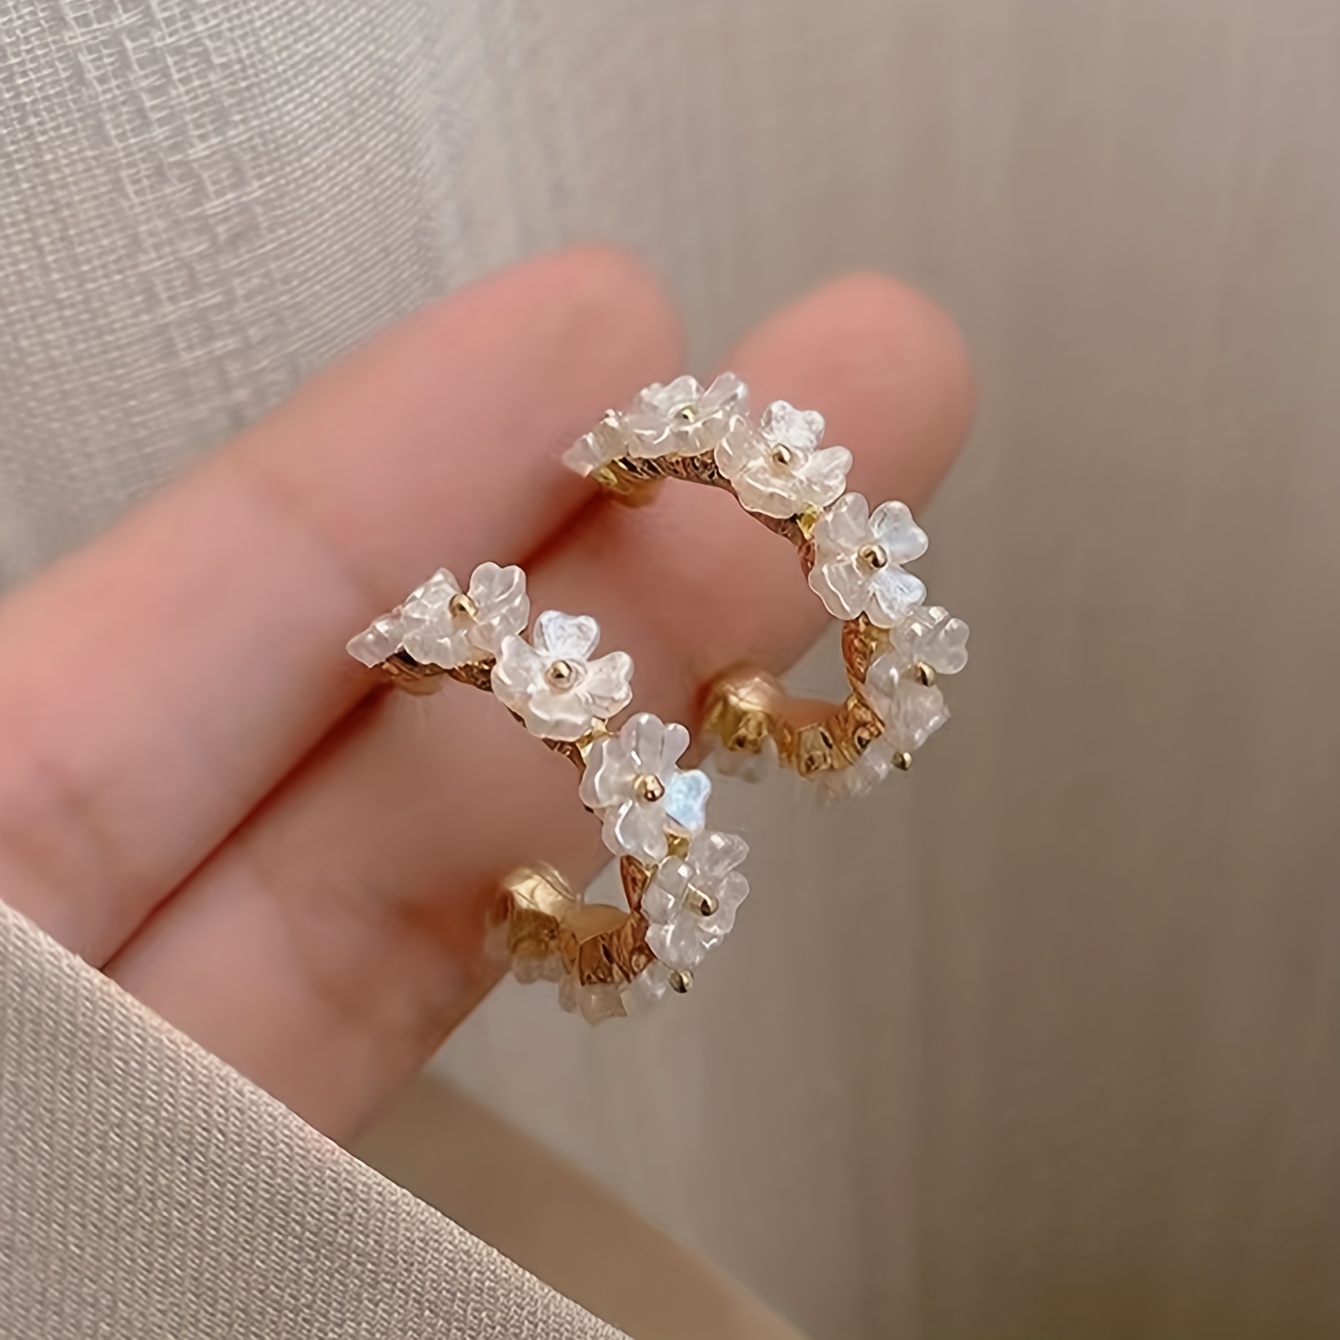 

Delicate Hoop Earrings Zinc Alloy 14k Gold Plated Jewelry With Flower Design Vintage Elegant Style For Women Dating Earrings